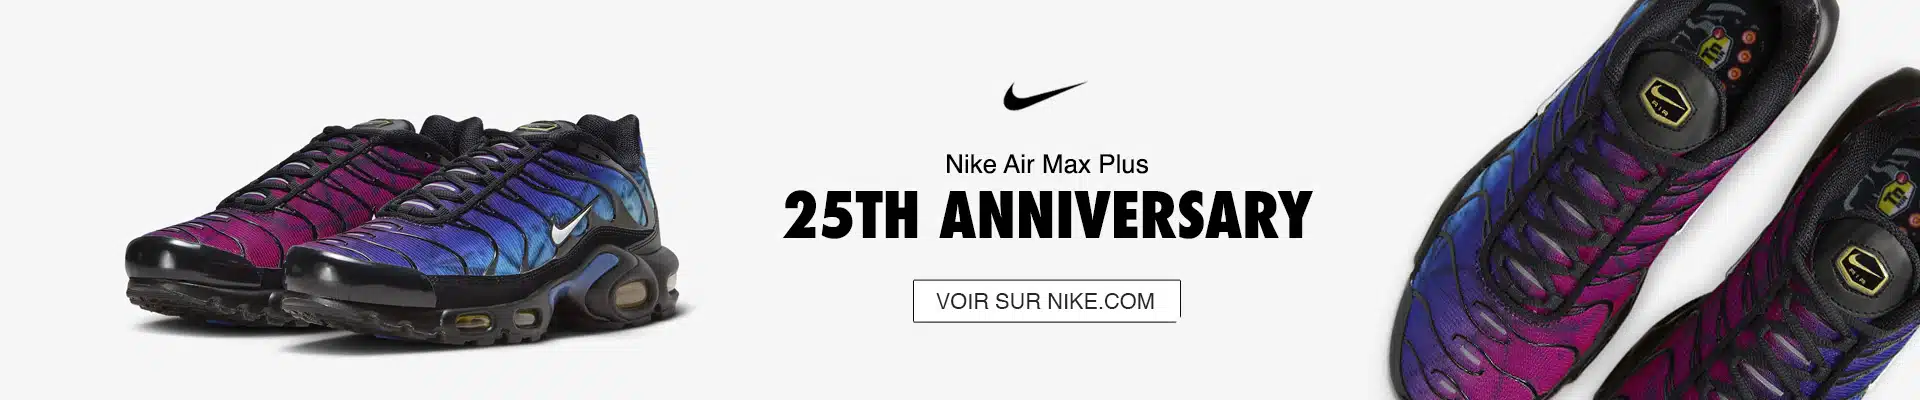 Nike Air Max Plus 25th anniversary